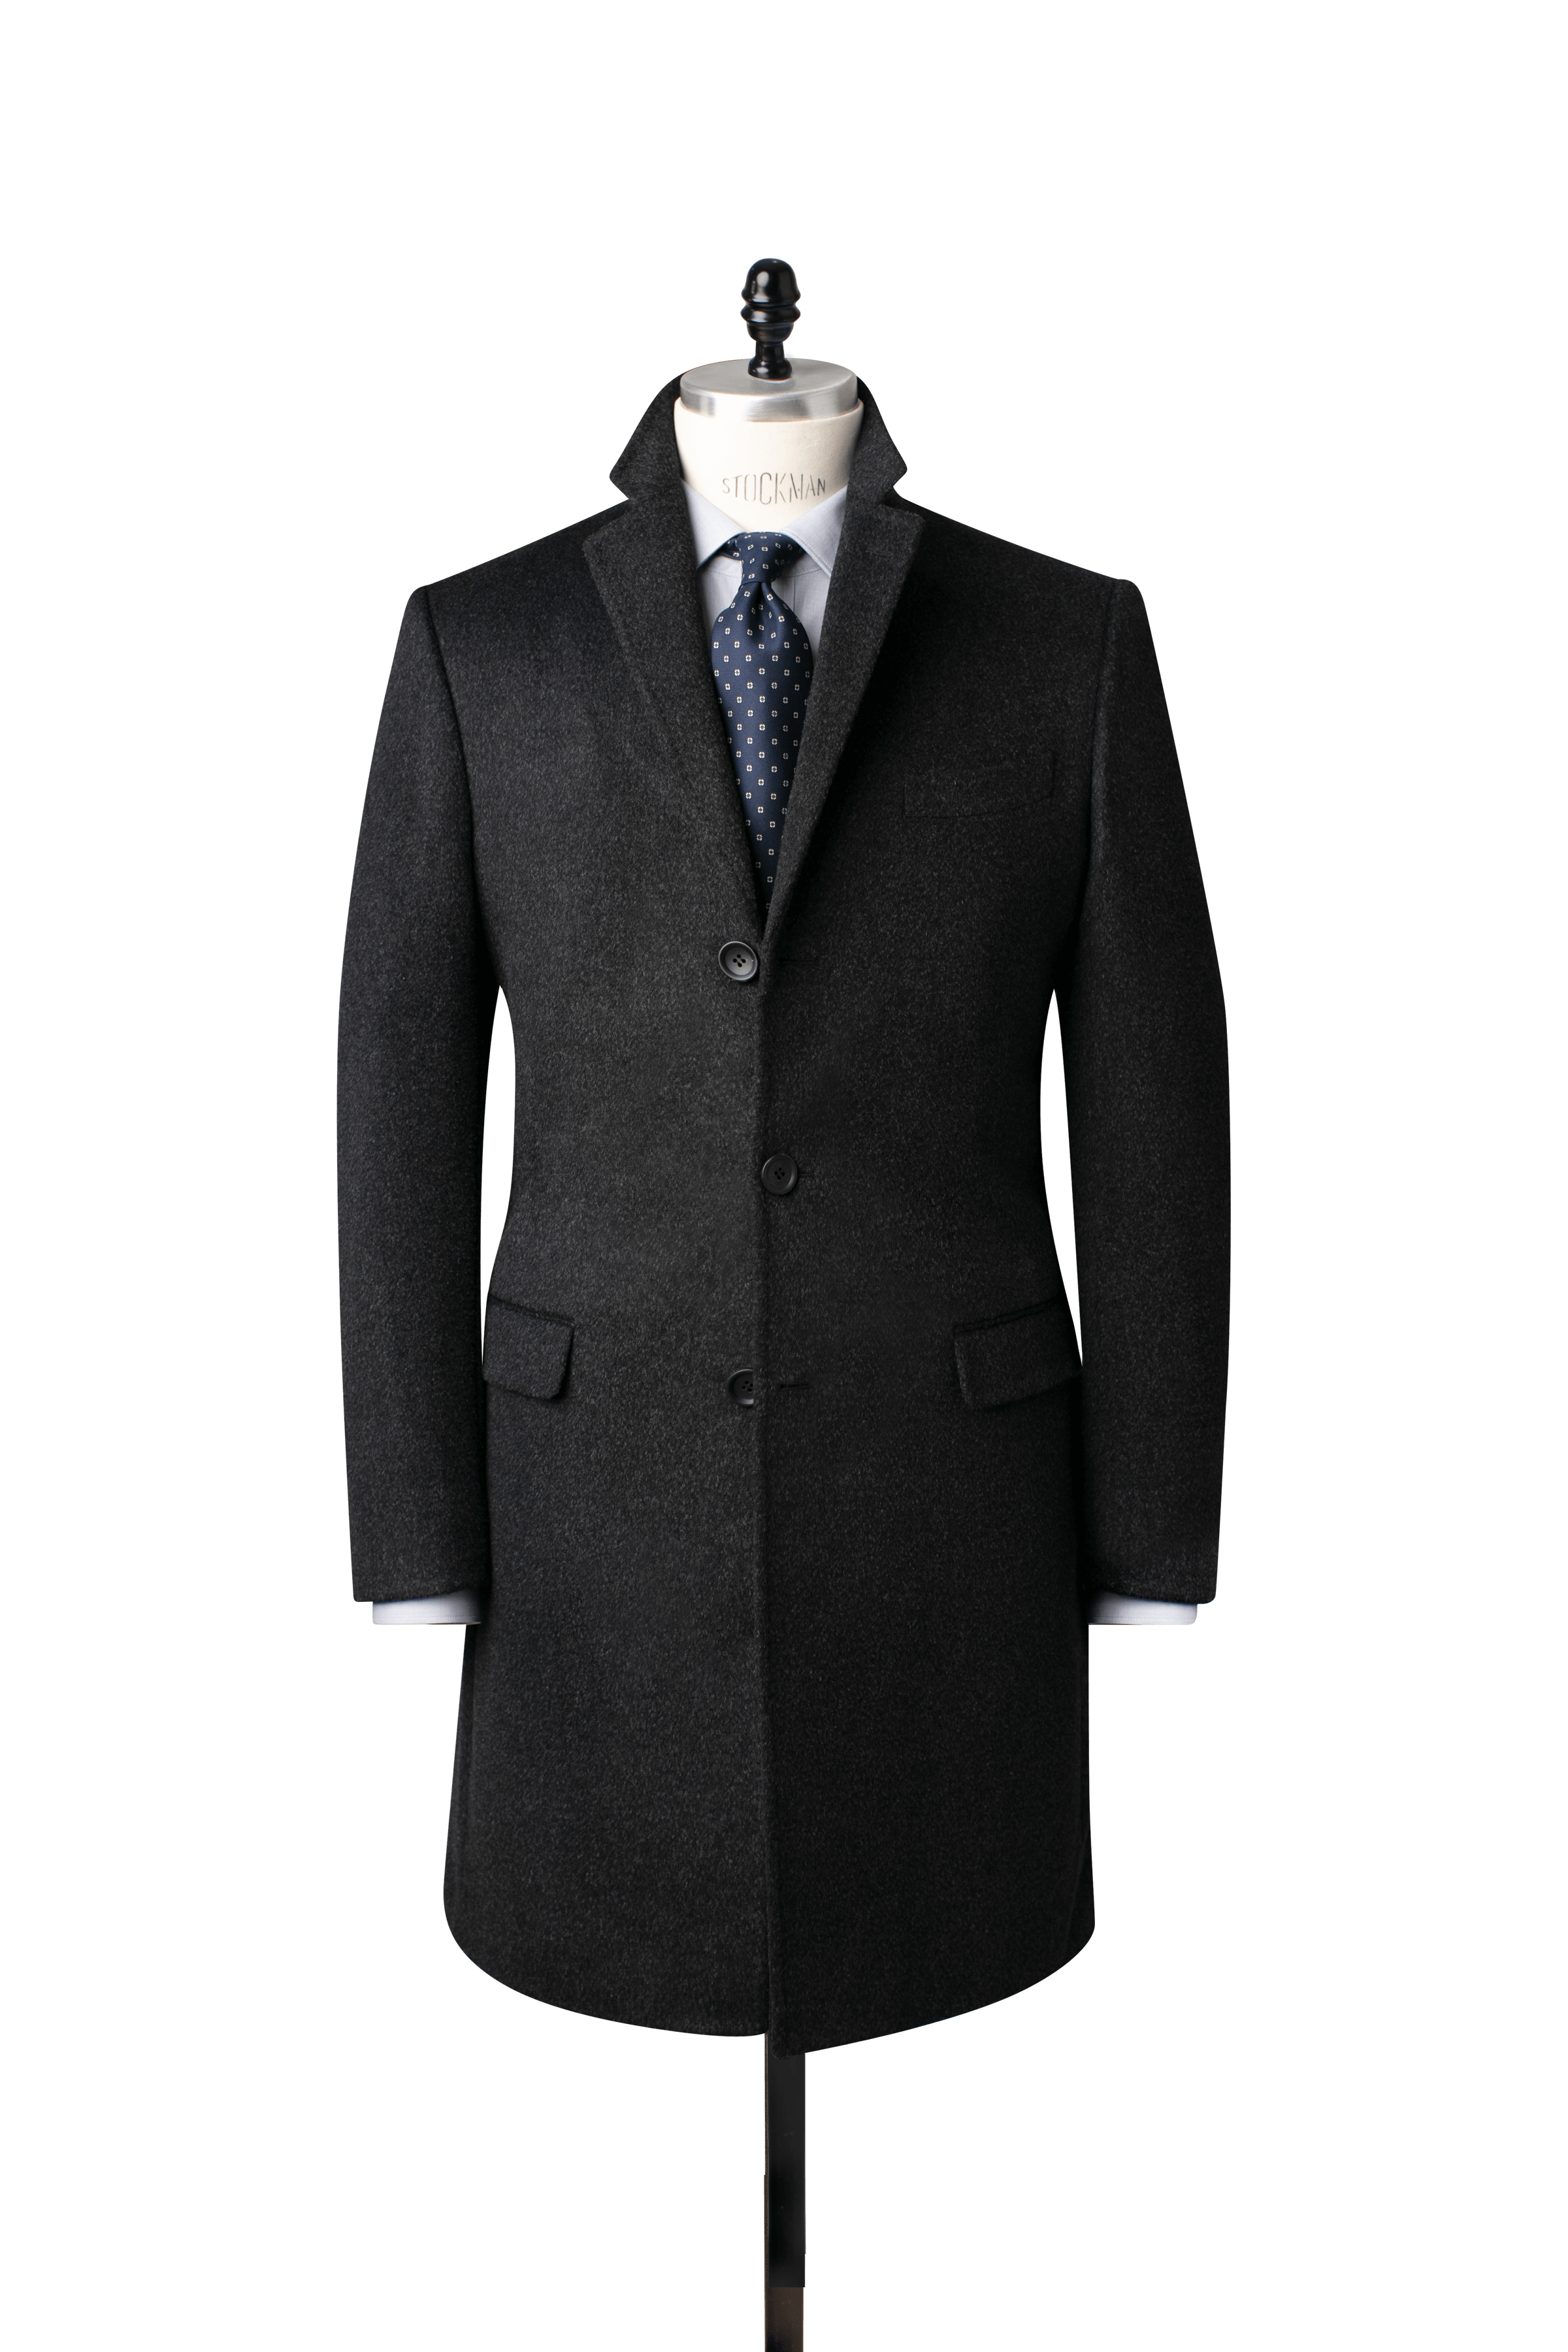 Knot Standard Black Overcoat by Knot Standard